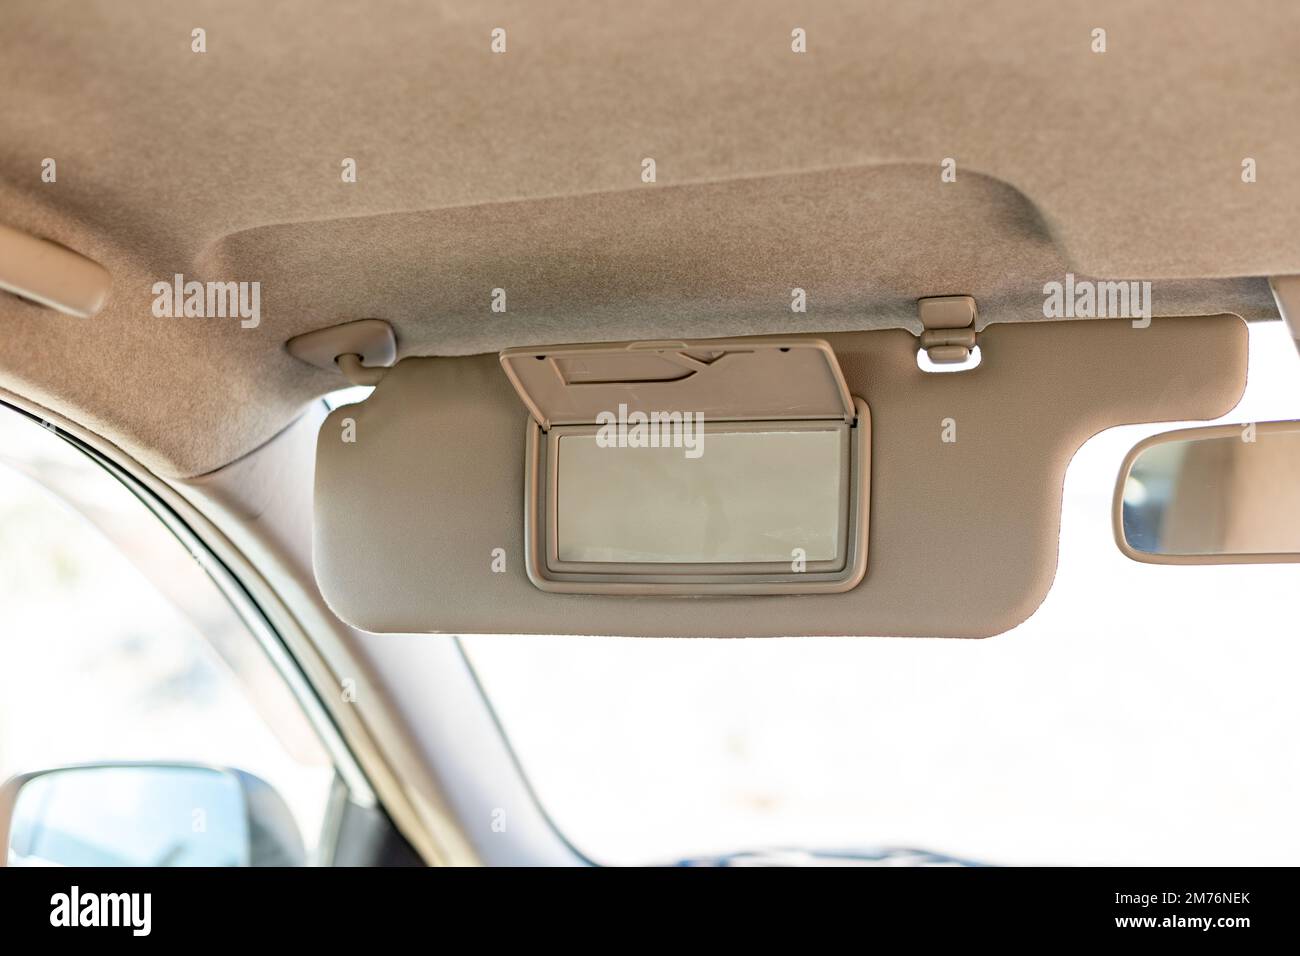 https://c8.alamy.com/comp/2M76NEK/sun-visor-with-mirror-in-a-car-2M76NEK.jpg